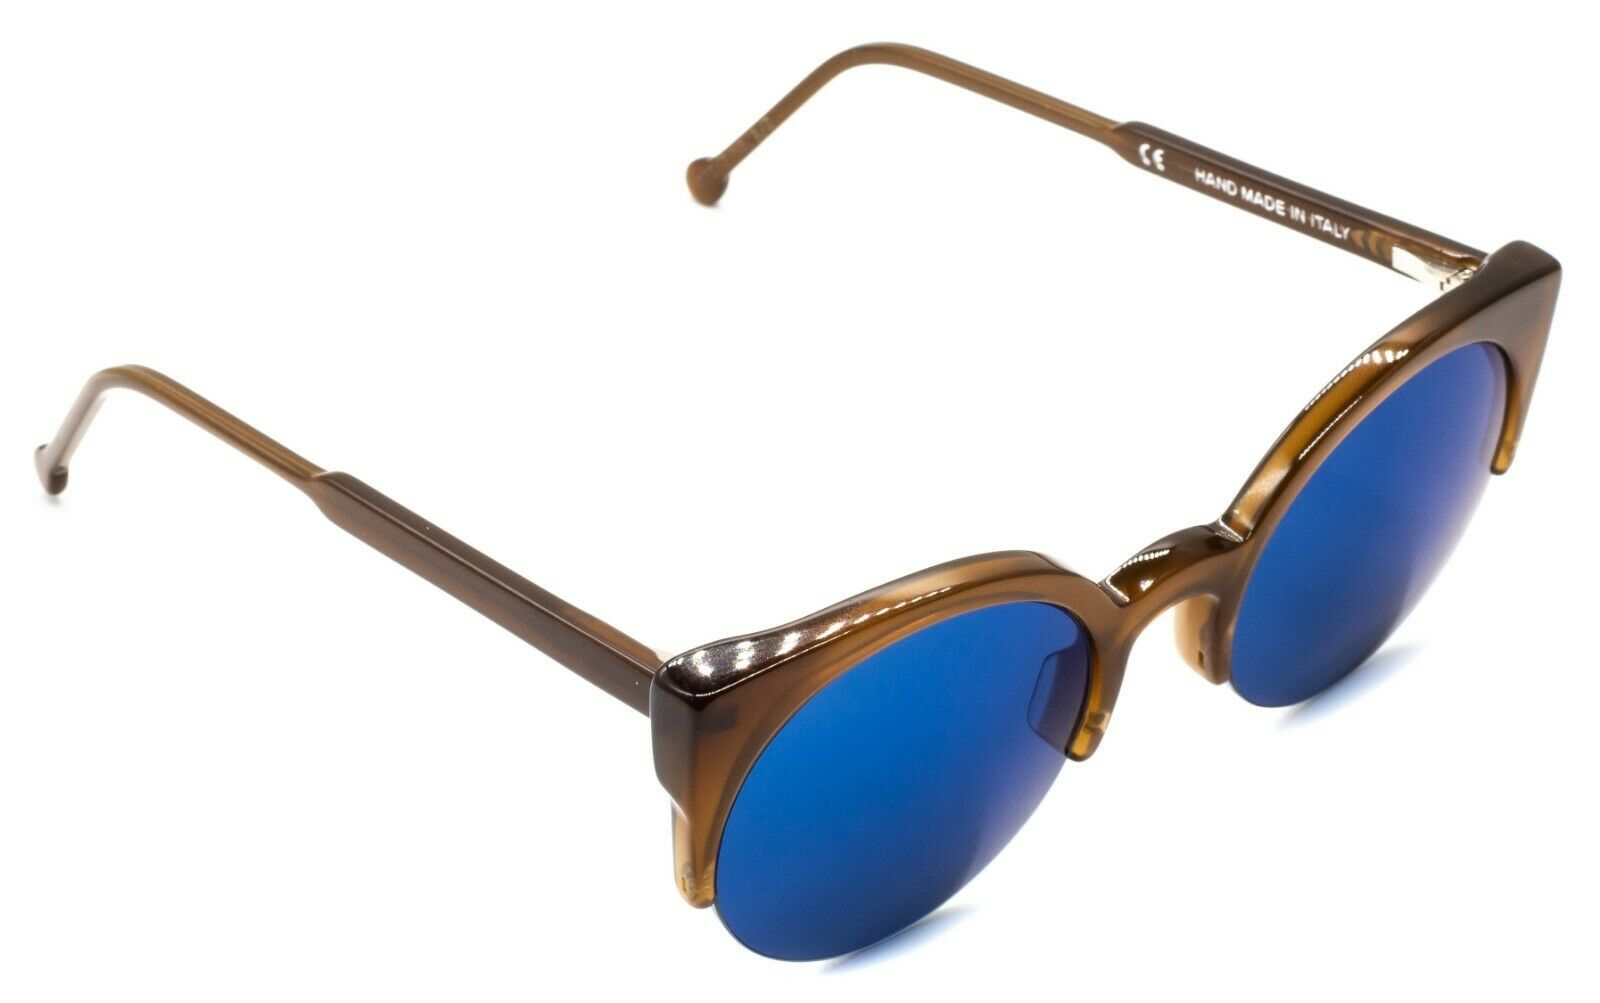 RETROSUPERFUTURE LUCIA DEEP BROWN D72 51mm Sunglasses Shades Eyewear New - Italy